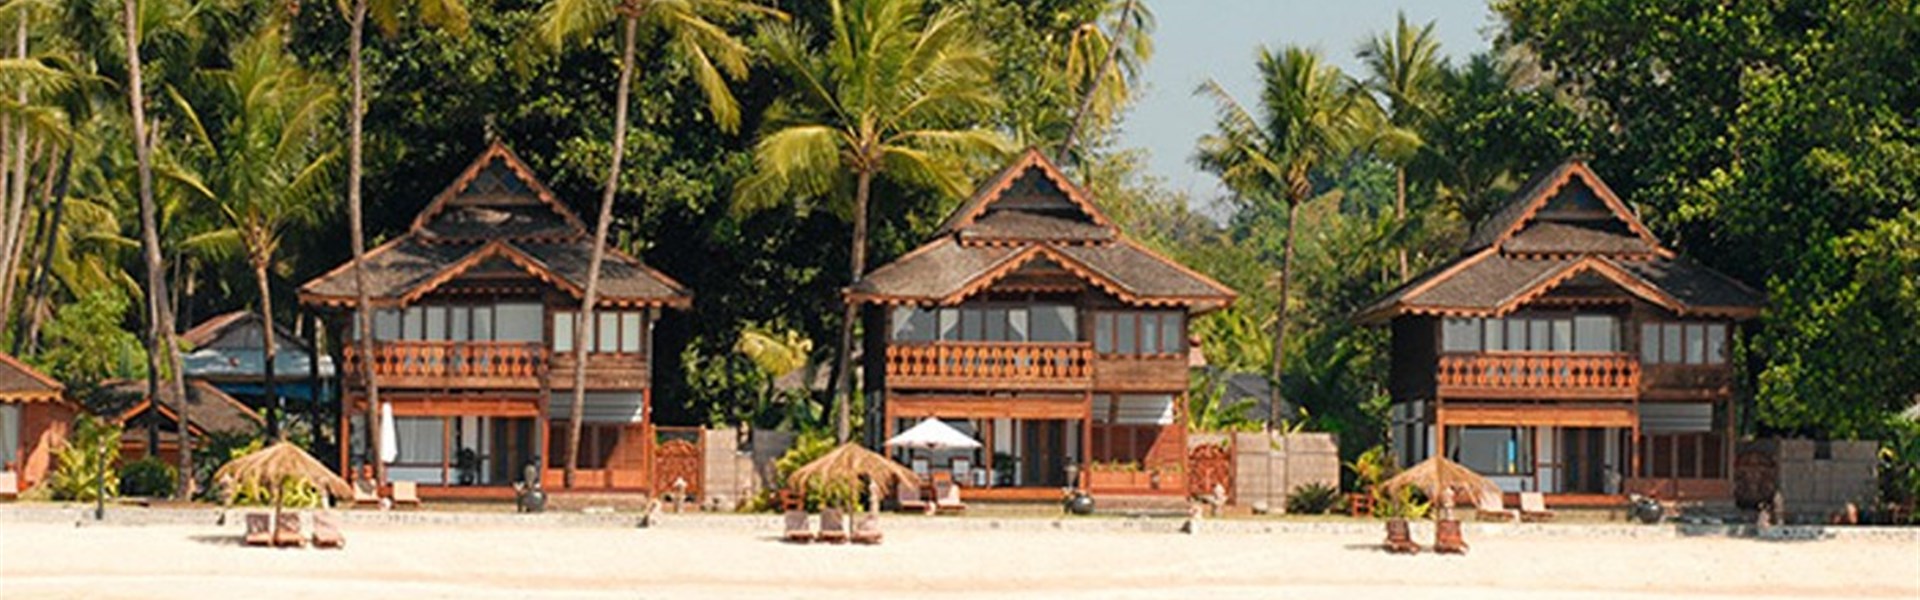 Marco Polo - Amazing Ngapali Resort - Amazing Ngapali Resort